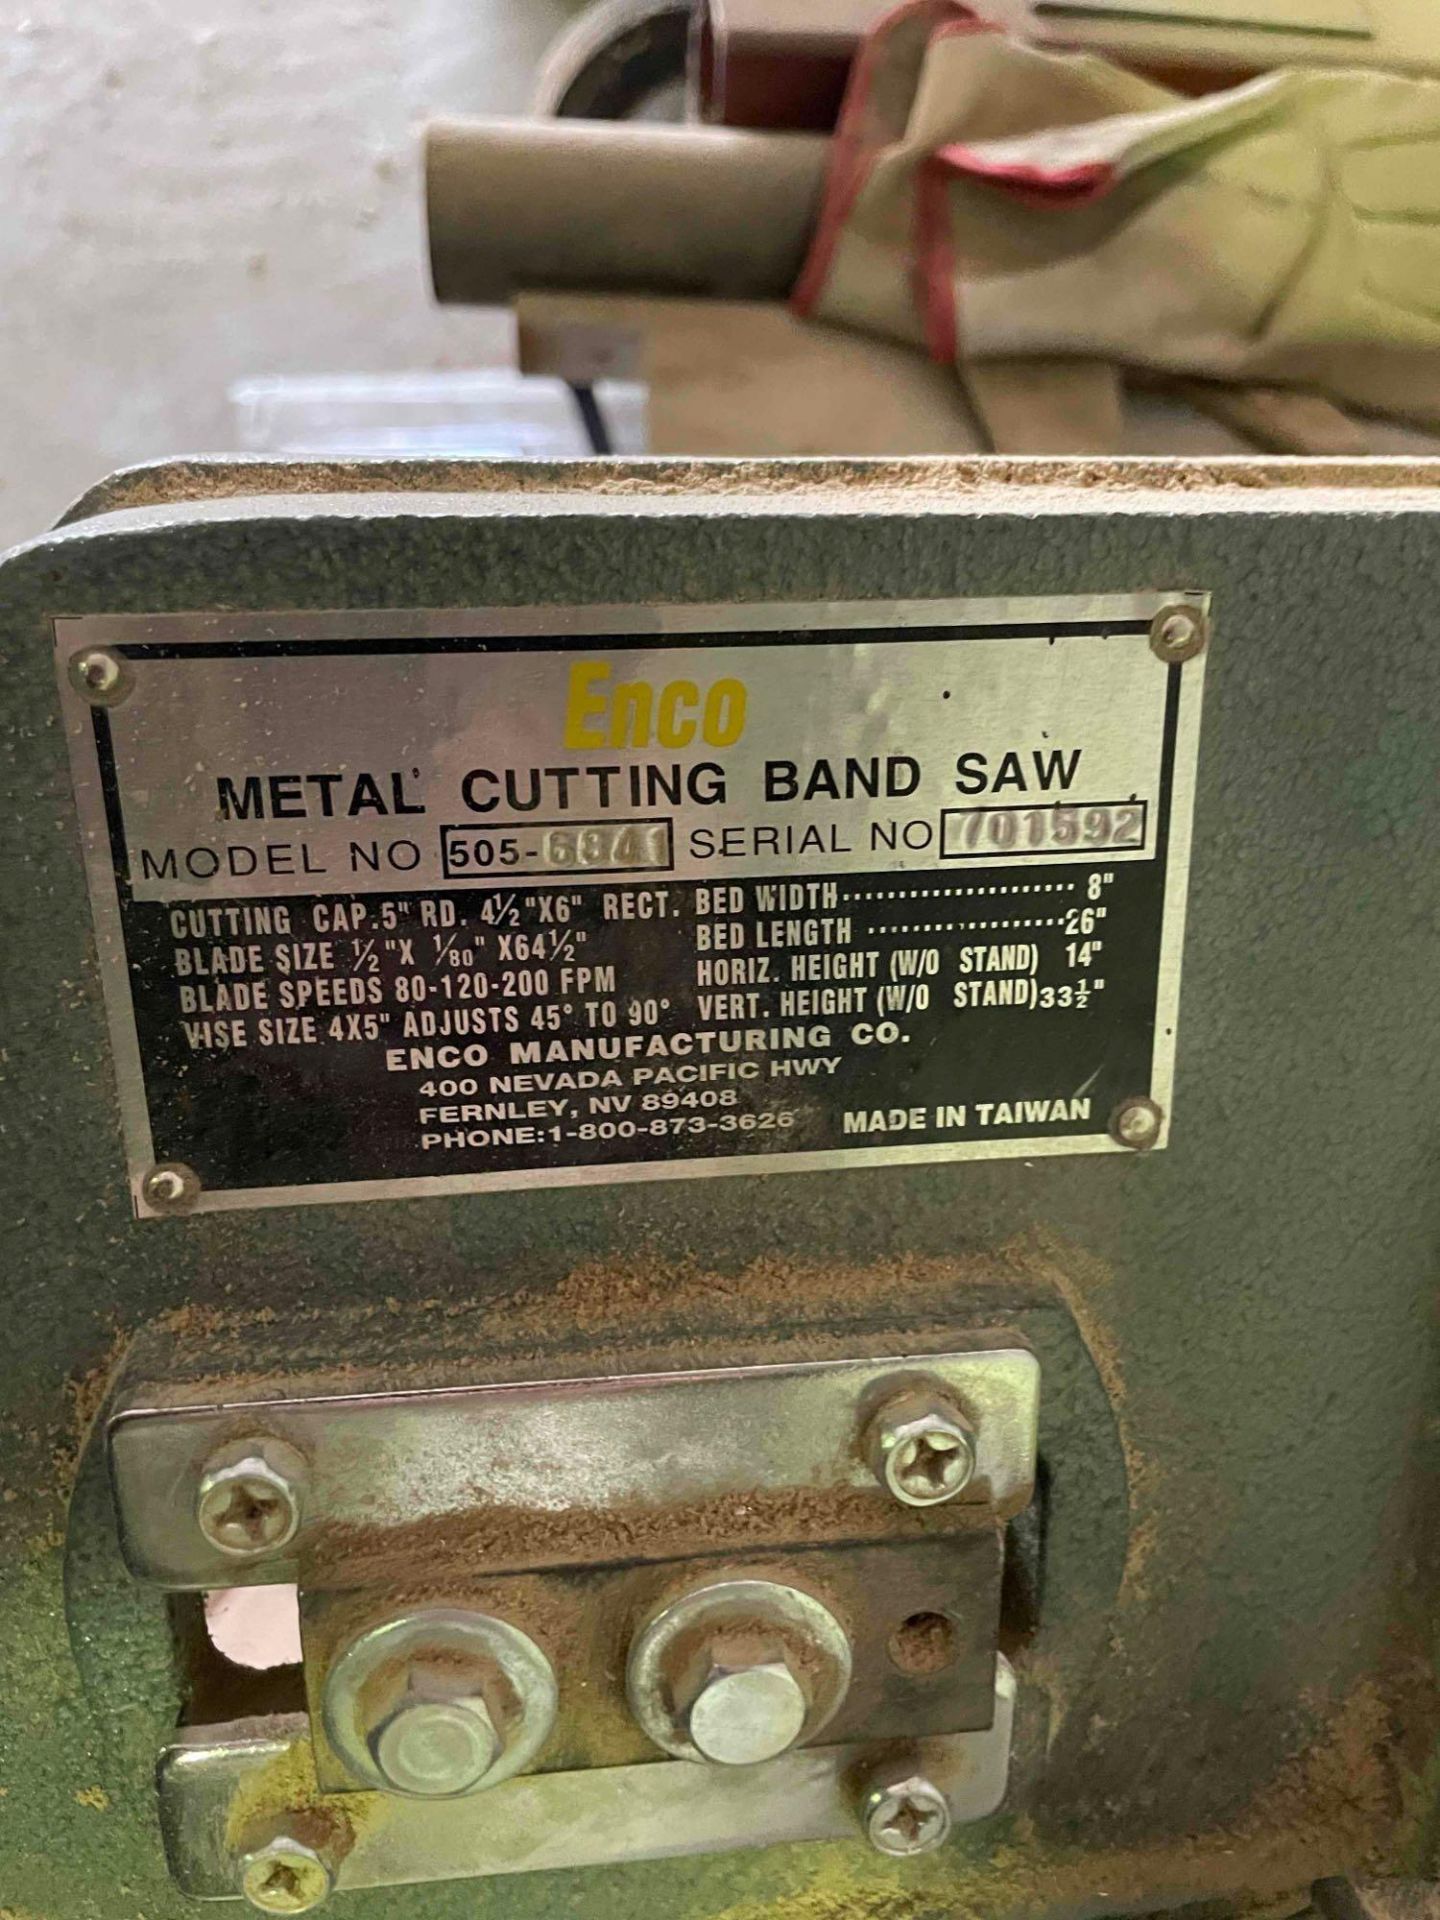 metal cutting band saw - Image 2 of 4